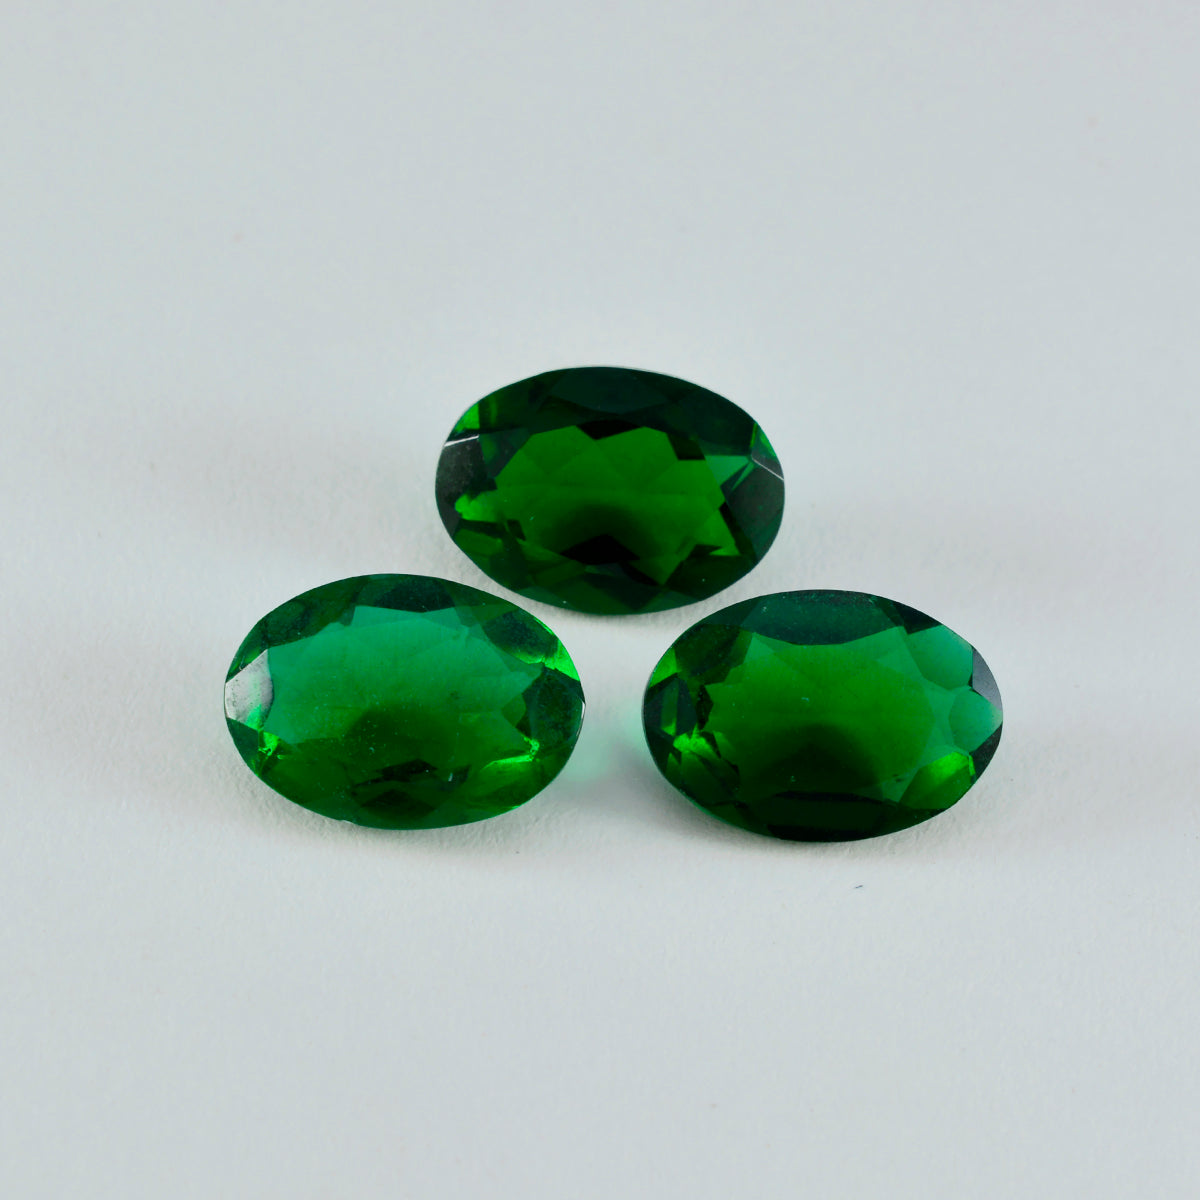 Riyogems 1 Stück grüner Smaragd, CZ, facettiert, 10 x 14 mm, ovale Form, hübscher, hochwertiger, loser Edelstein